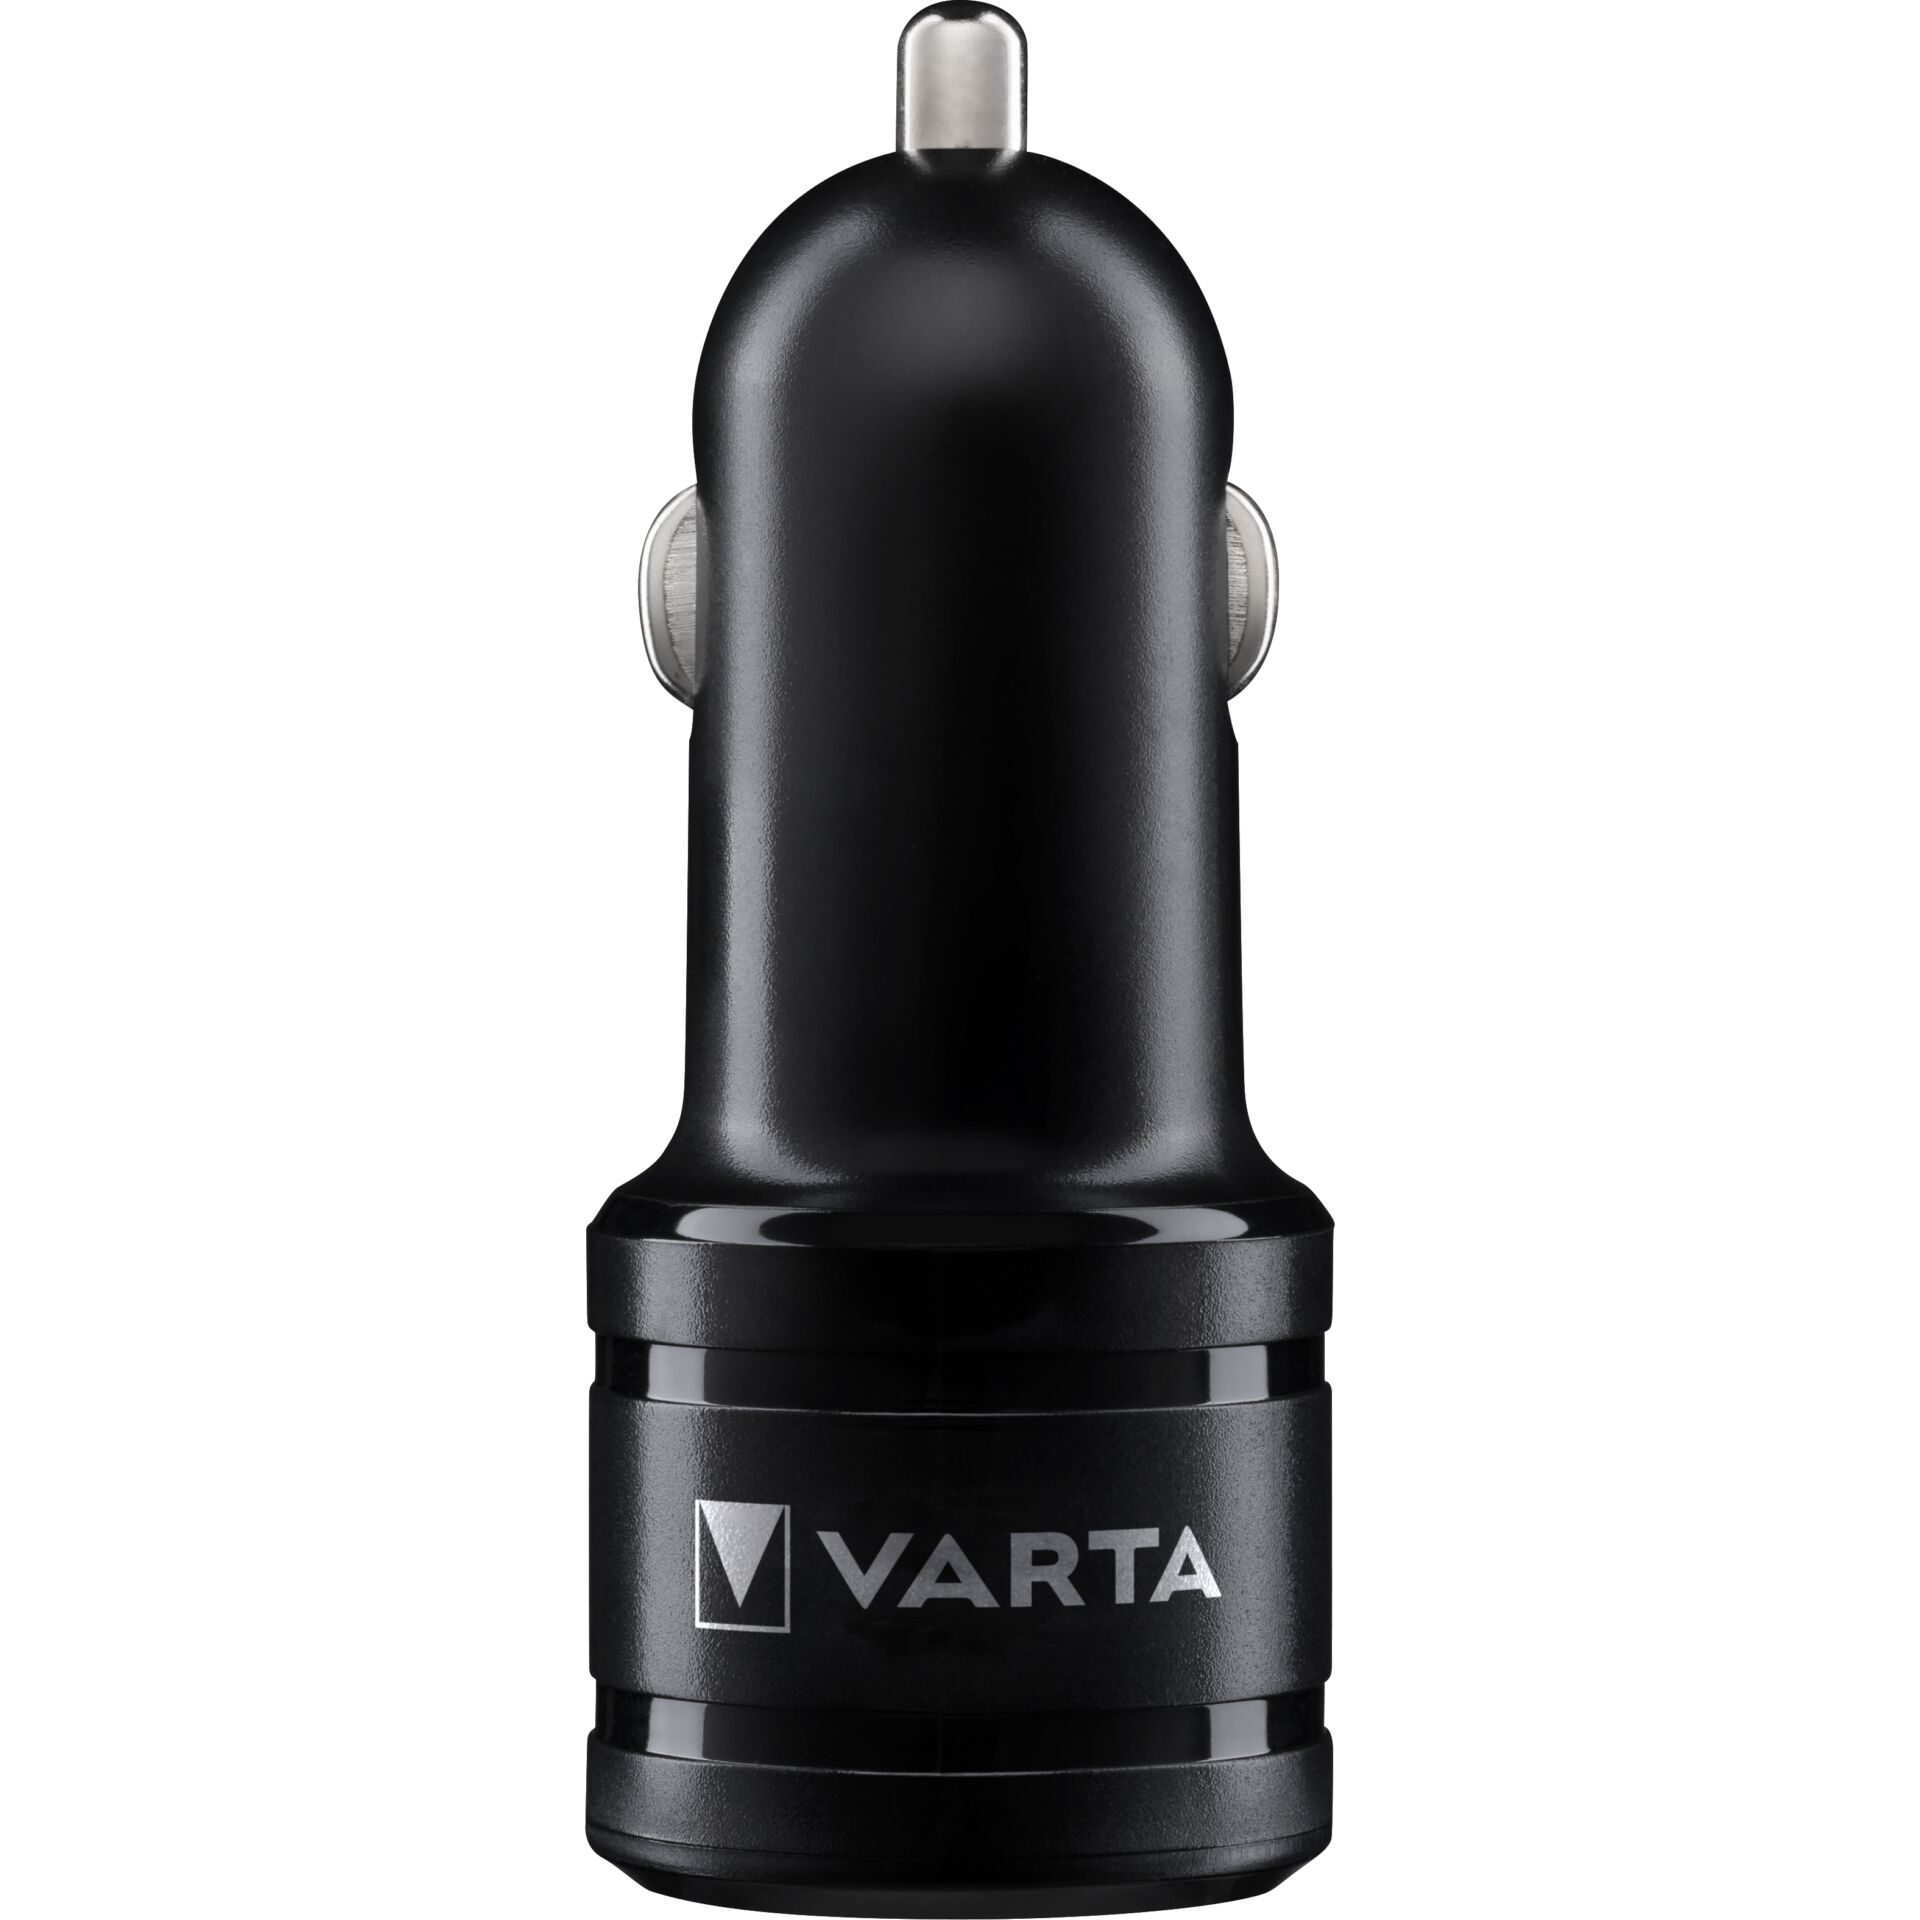 VARTA Car Charger Dual USB Type C PD & USB A